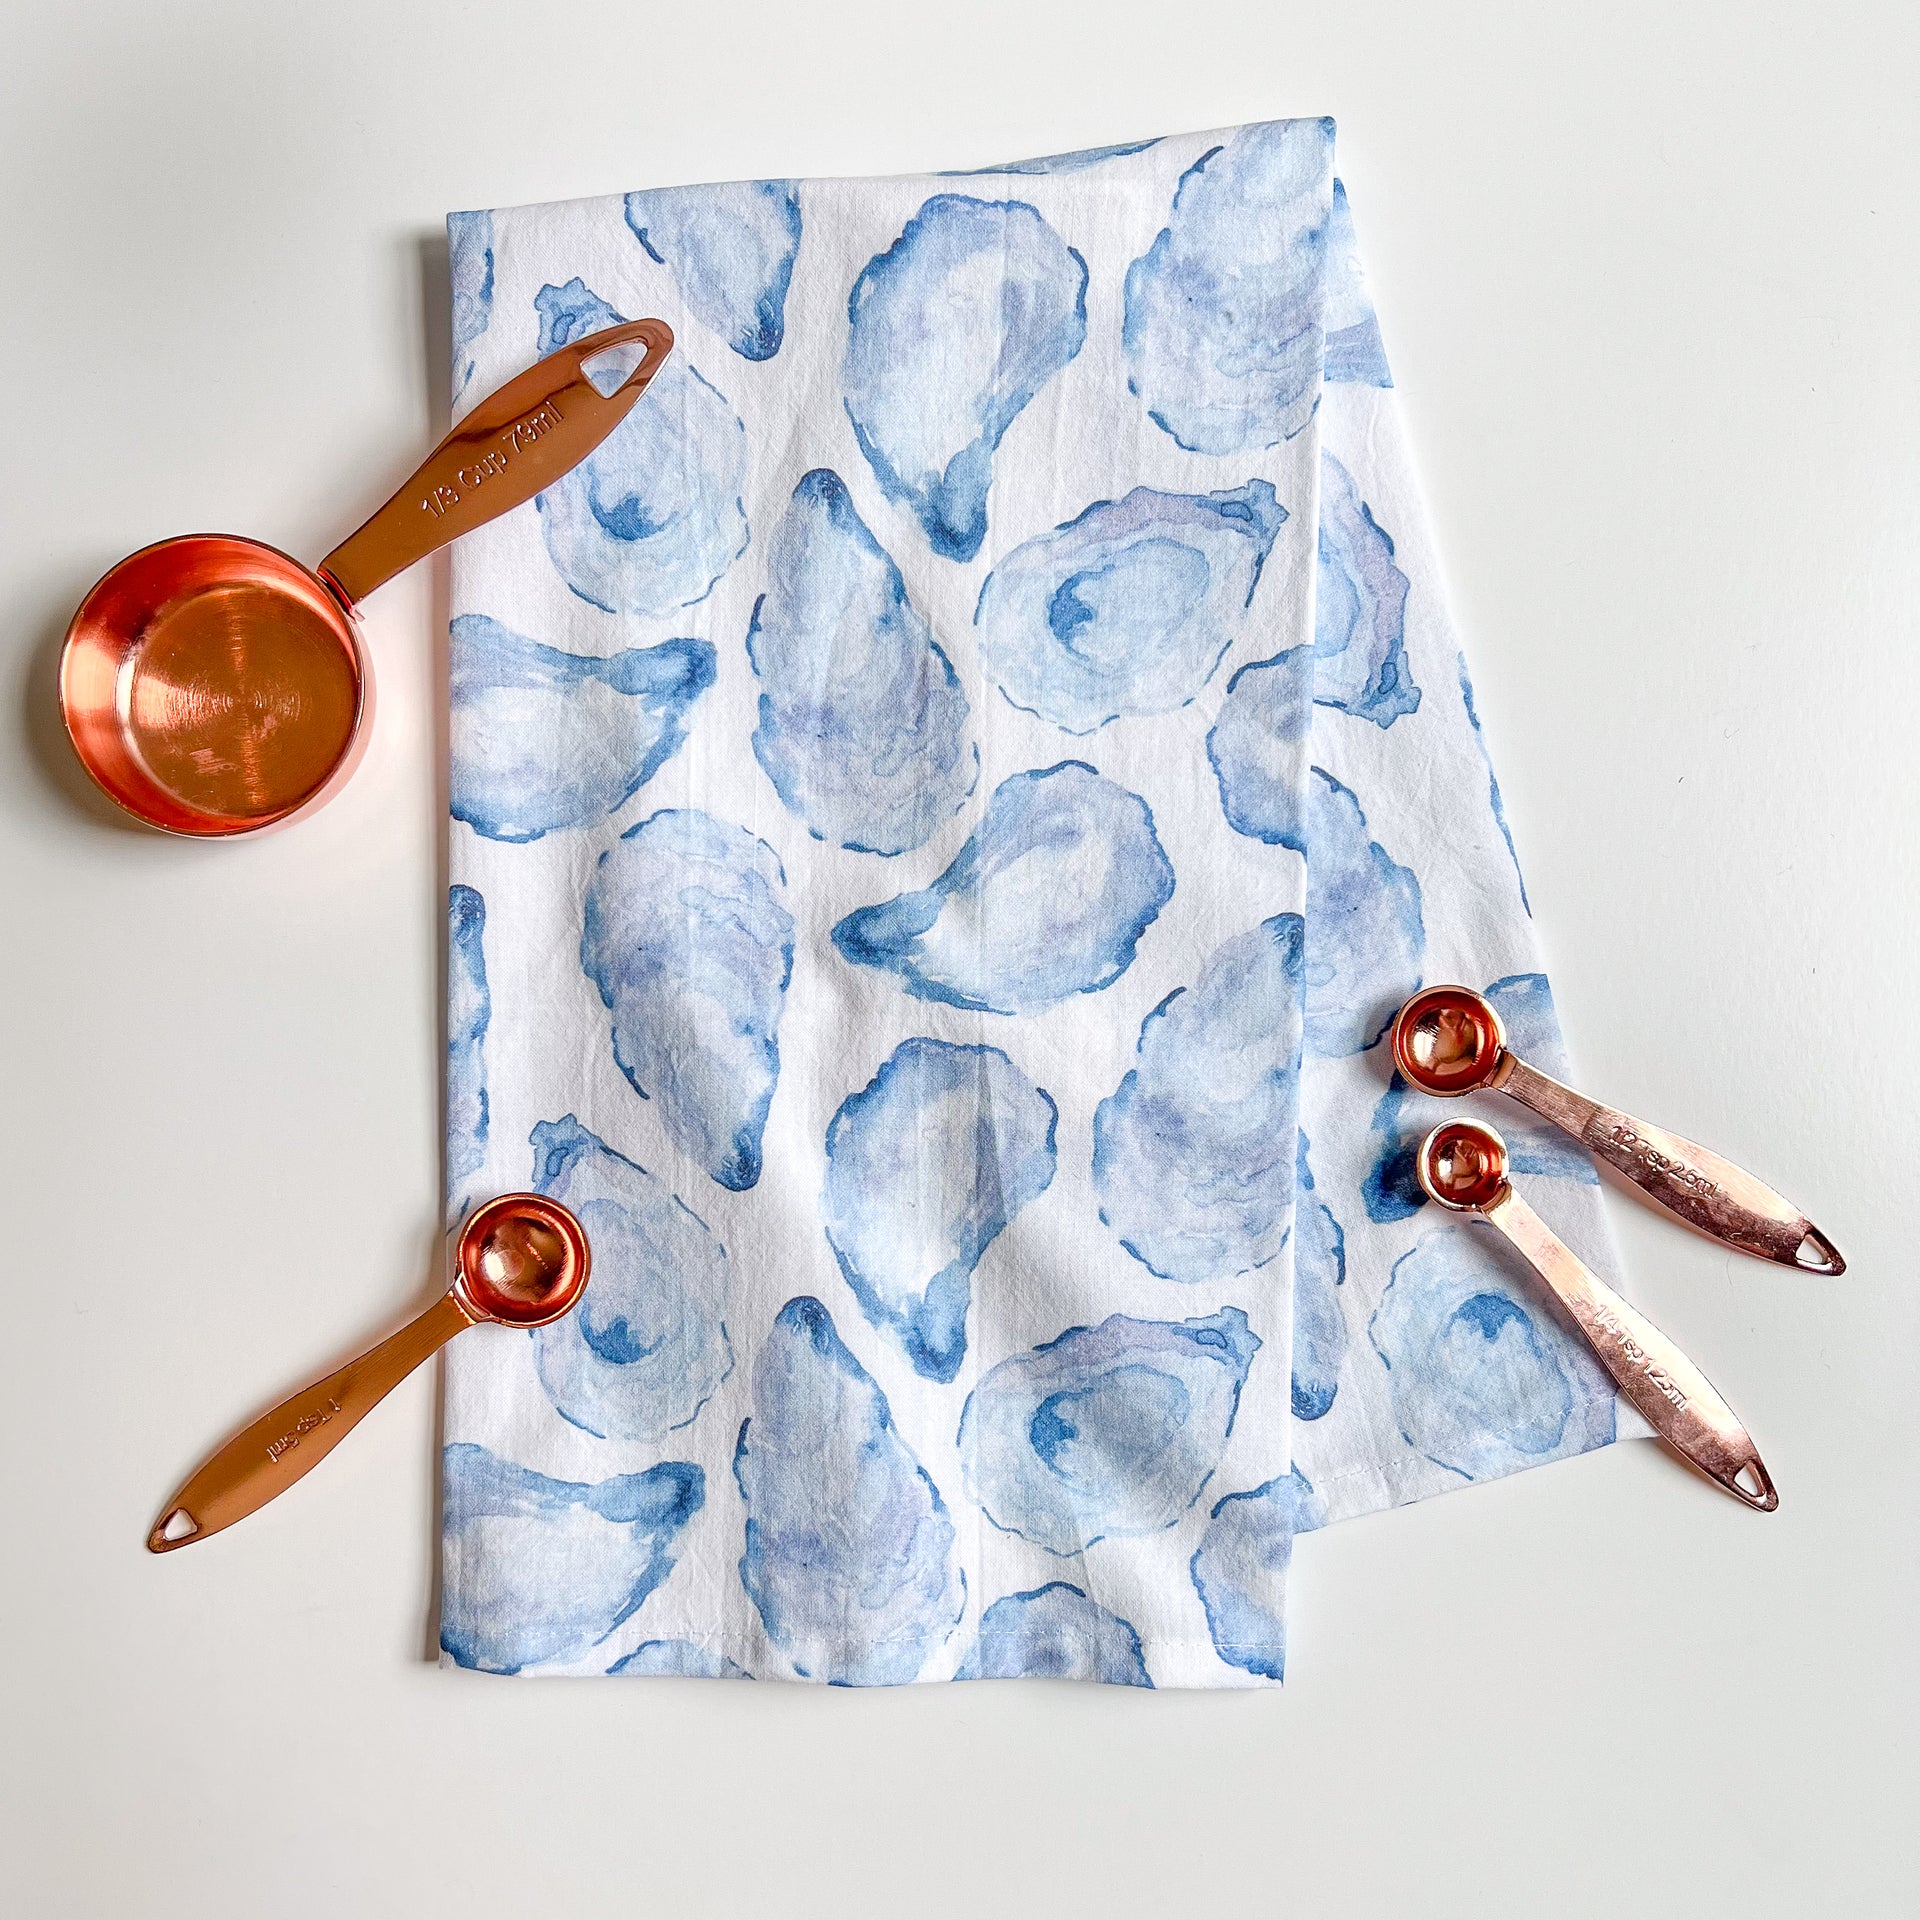 Mussel Shell Tea Towel by Gert & Co